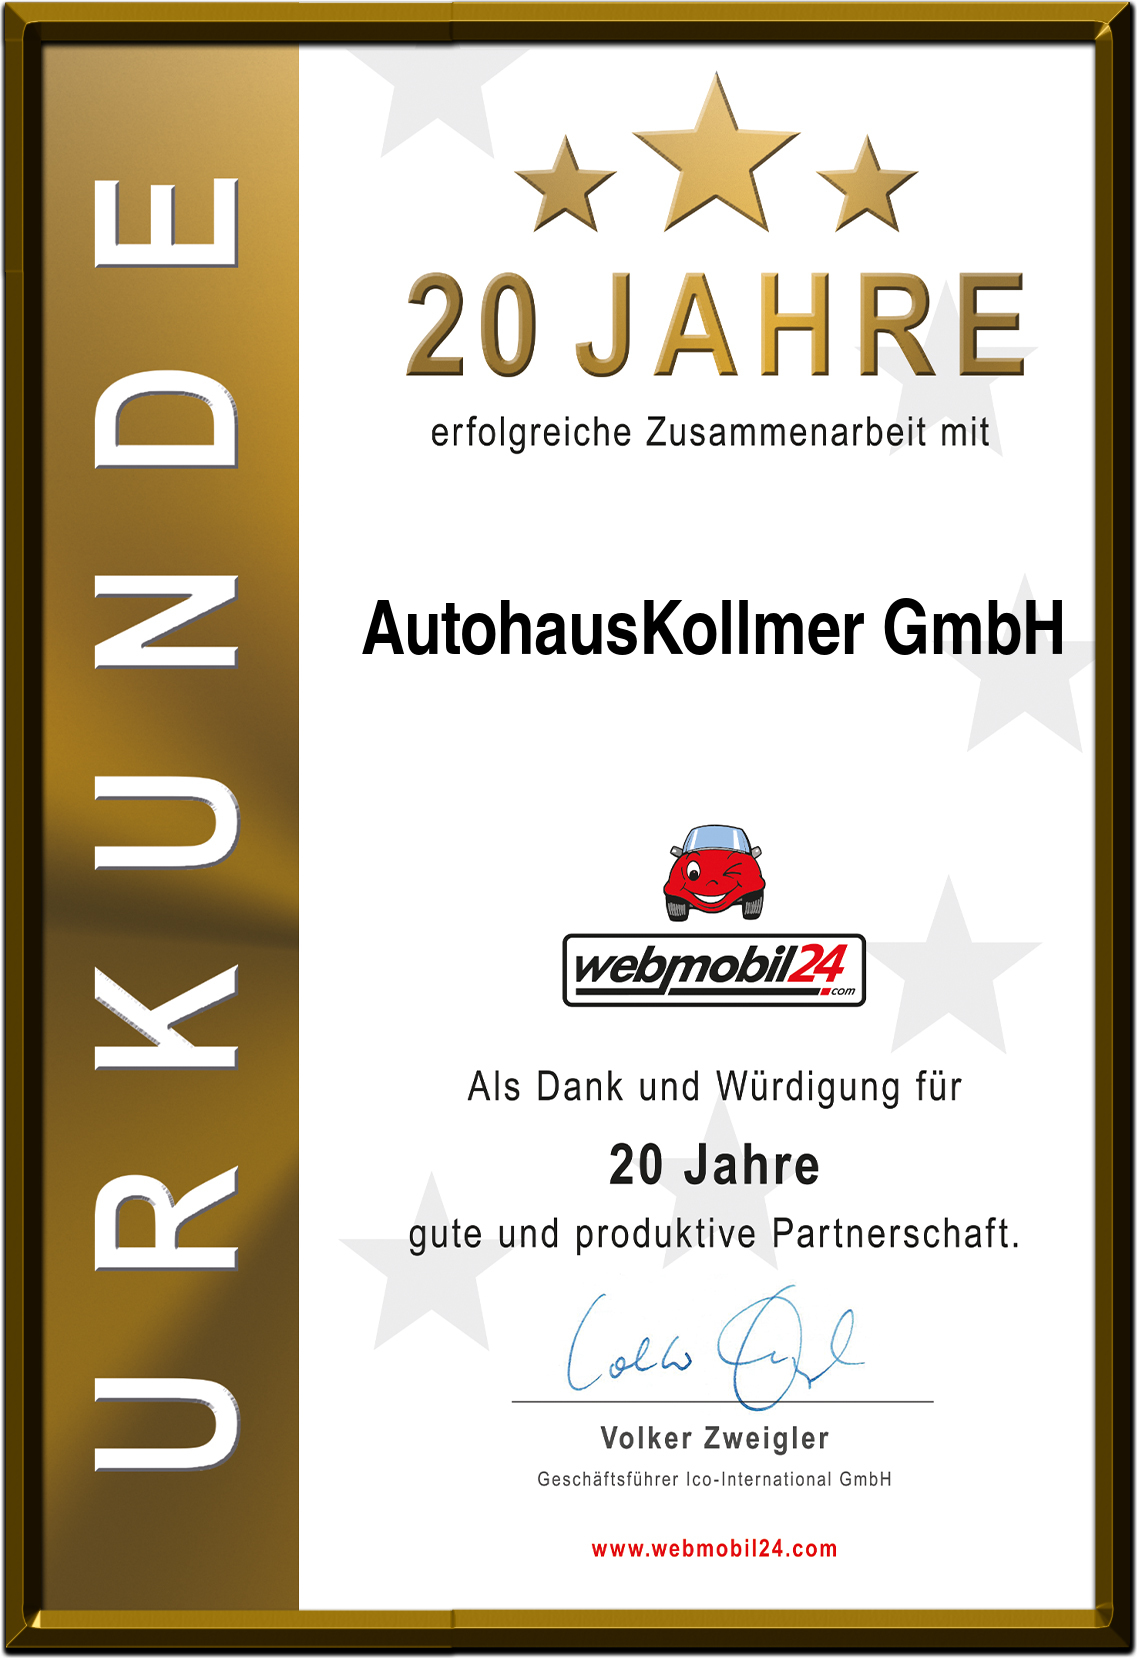 AutohausKollmer GmbH